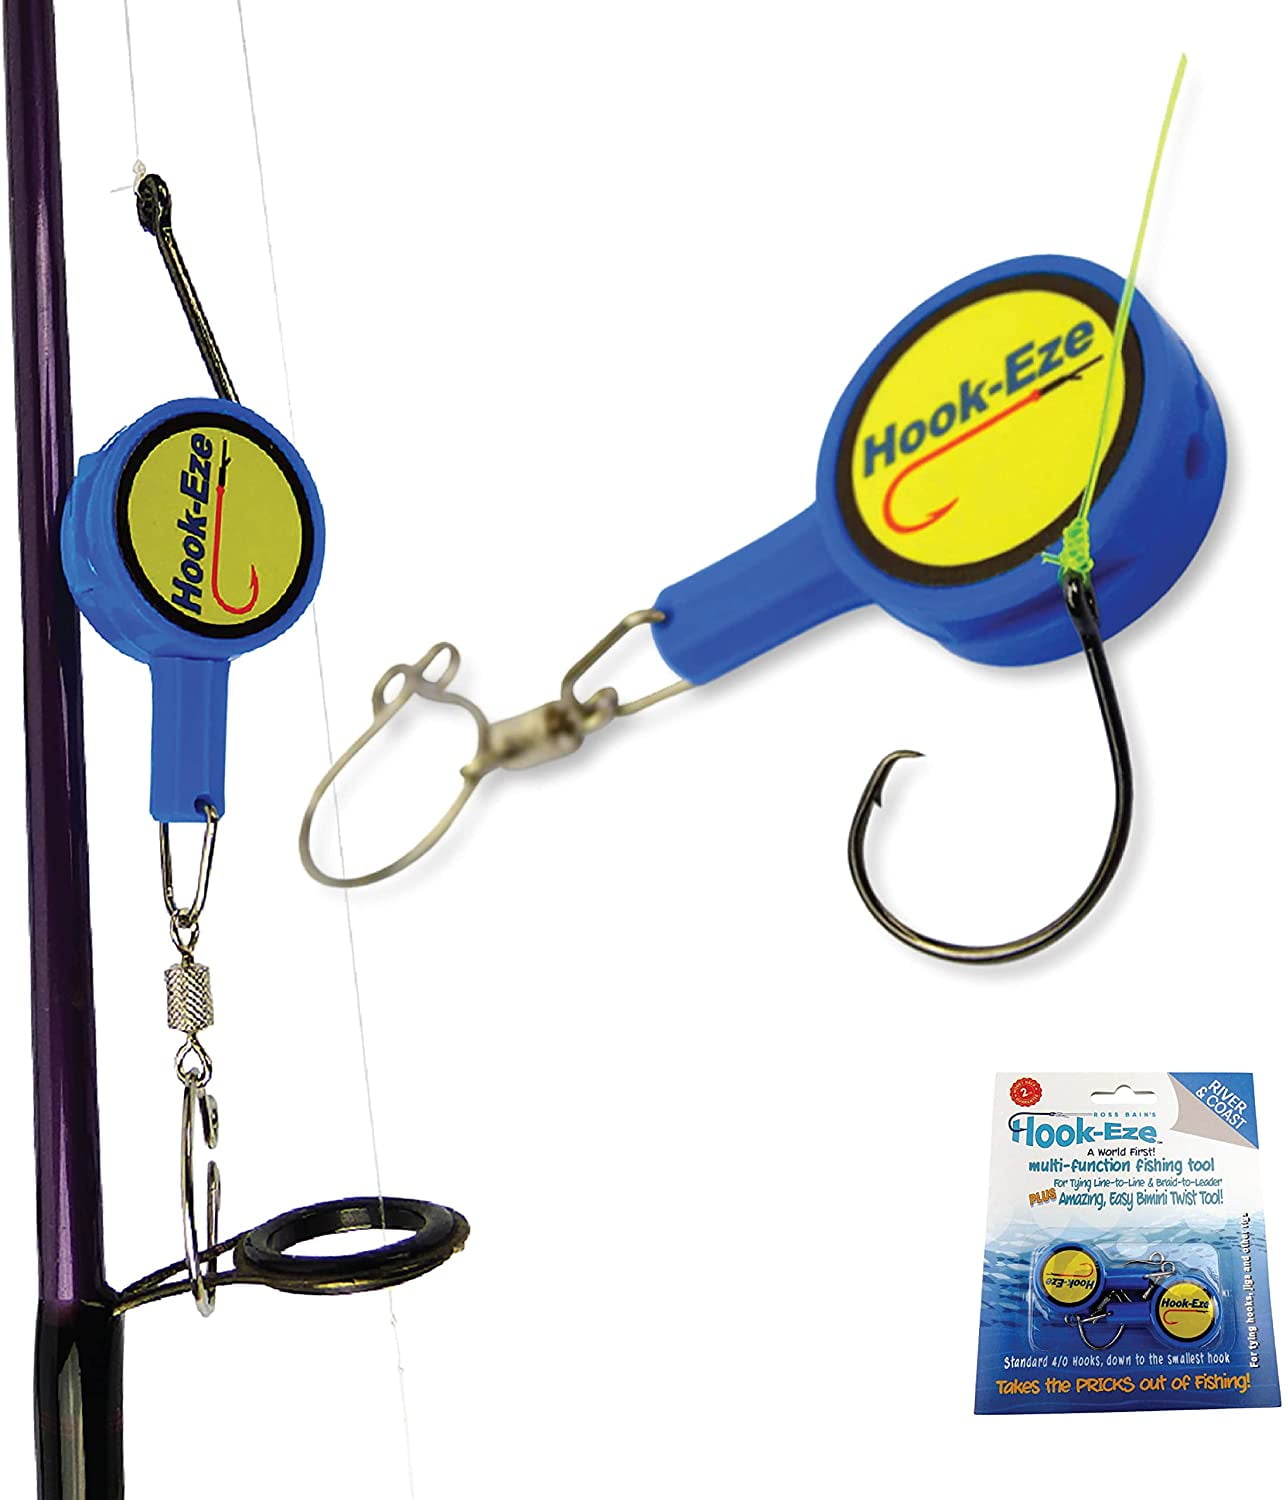 Hook-Eze Fishing Tool - 5 Twin Packs - Hook Tying Georgia